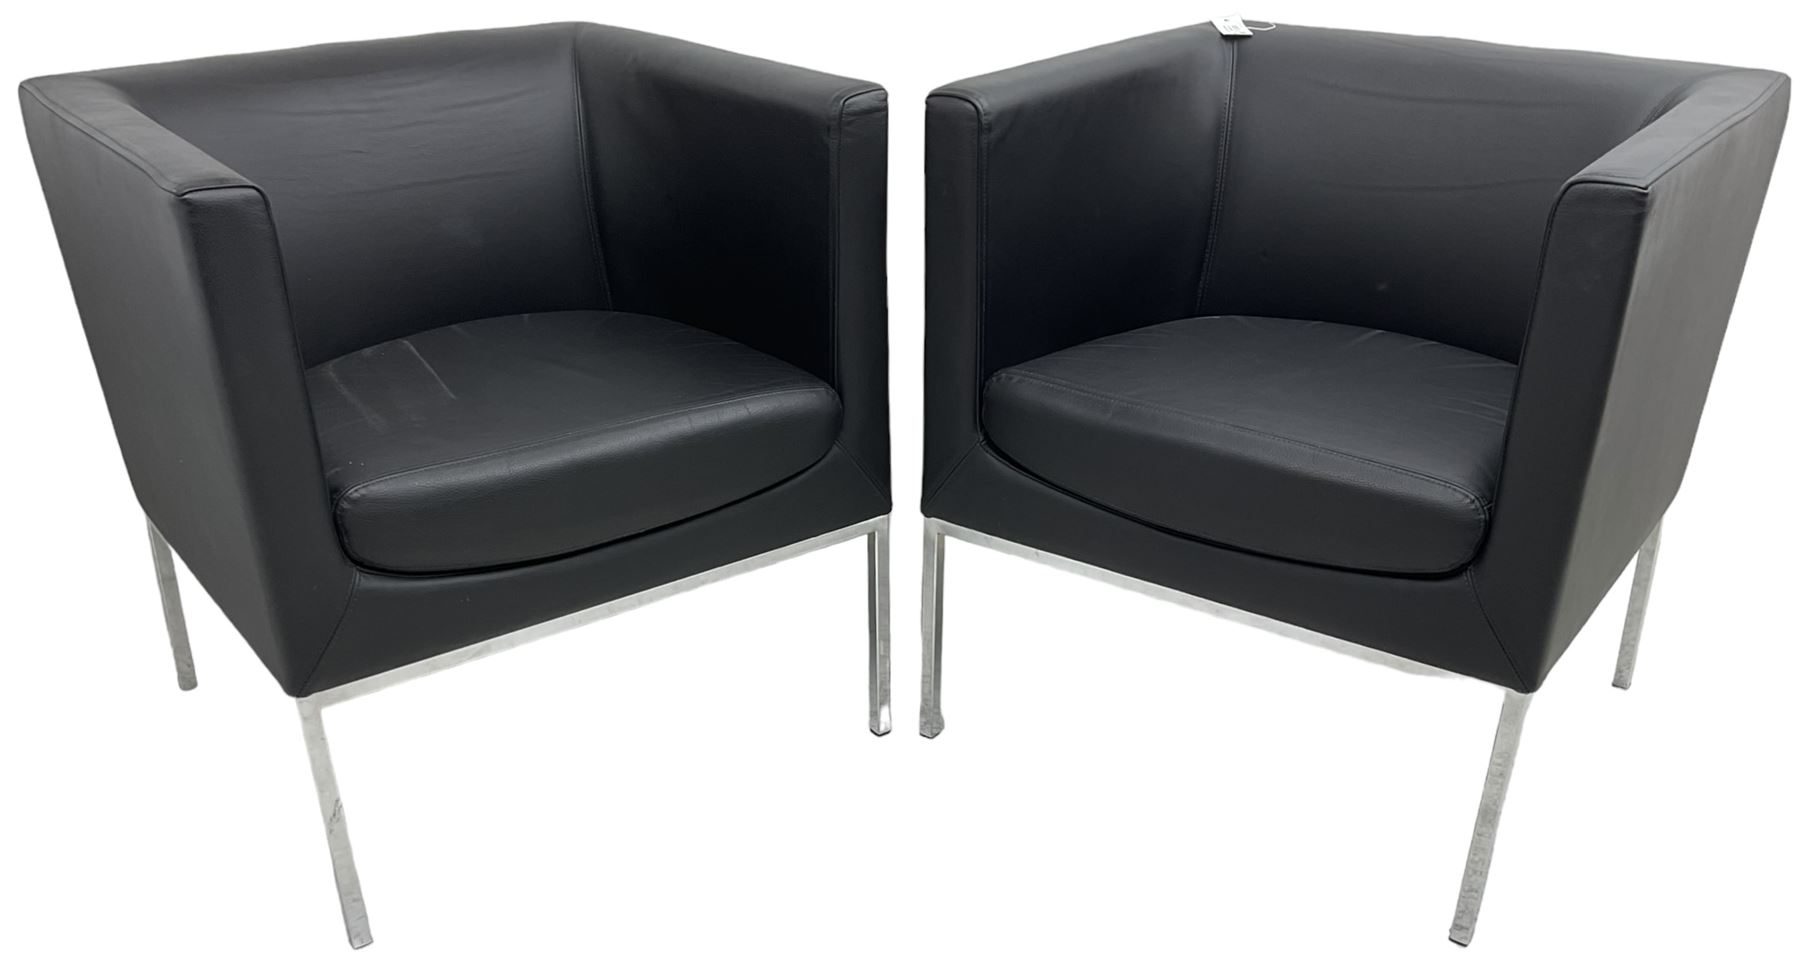 Orangebox - pair of contemporary 'Drift' tub armchairs - Image 6 of 7